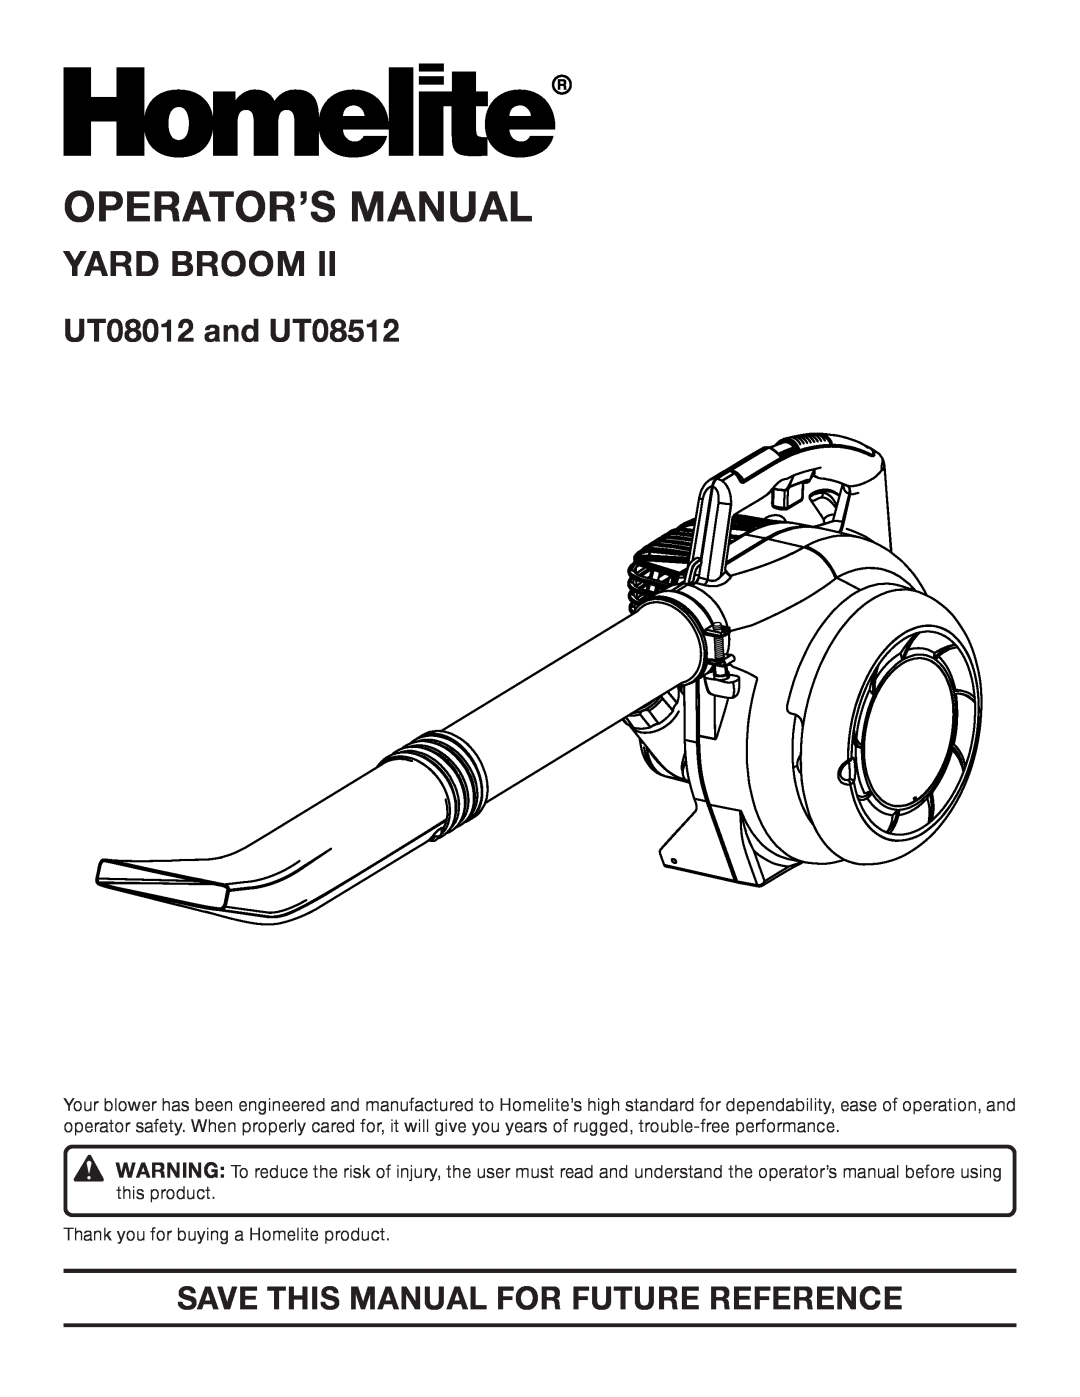 Homelite manual Operator’S Manual, Yard Broom, UT08012 and UT08512, Save This Manual For Future Reference 